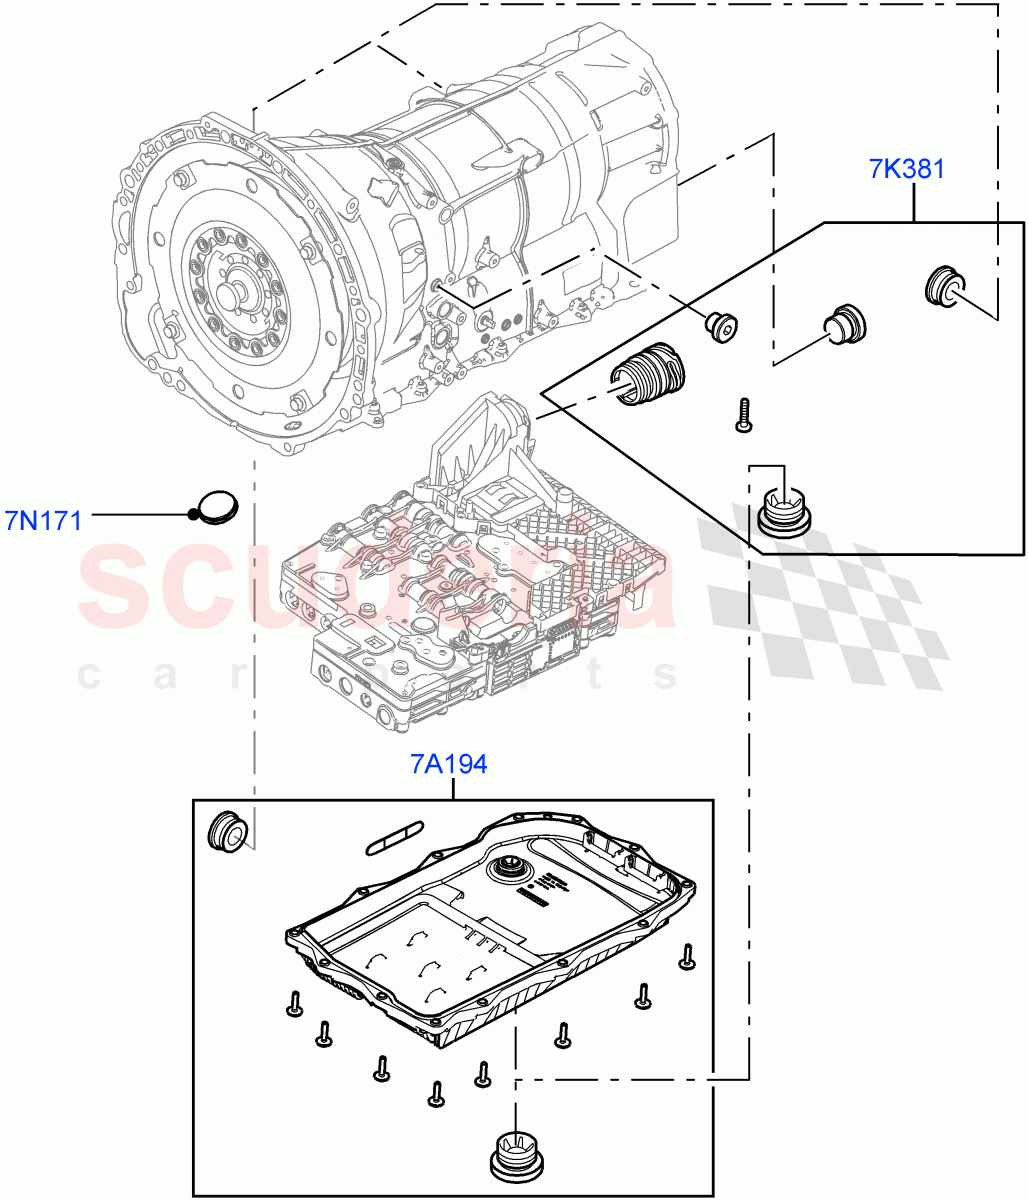 Transmission External Components(3.0L DOHC GDI SC V6 PETROL,8 Speed Auto Trans ZF 8HP70 4WD,3.0 V6 D Gen2 Twin Turbo) of Land Rover Land Rover Range Rover Velar (2017+) [2.0 Turbo Petrol AJ200P]